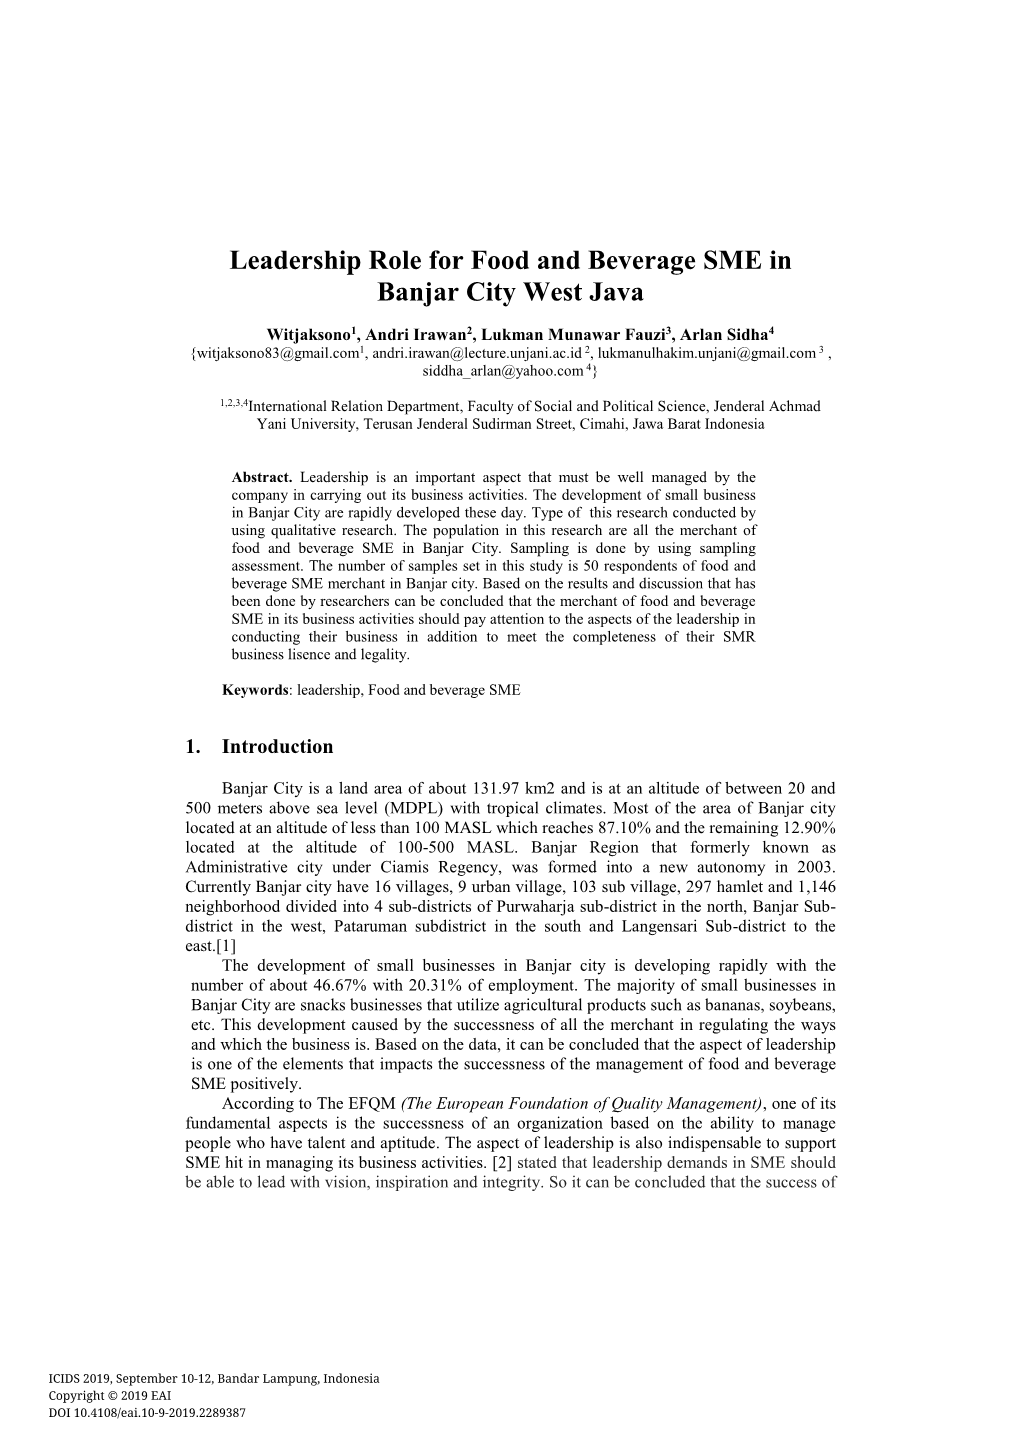 Leadership Role for Food and Beverage SME in Banjar City West Java